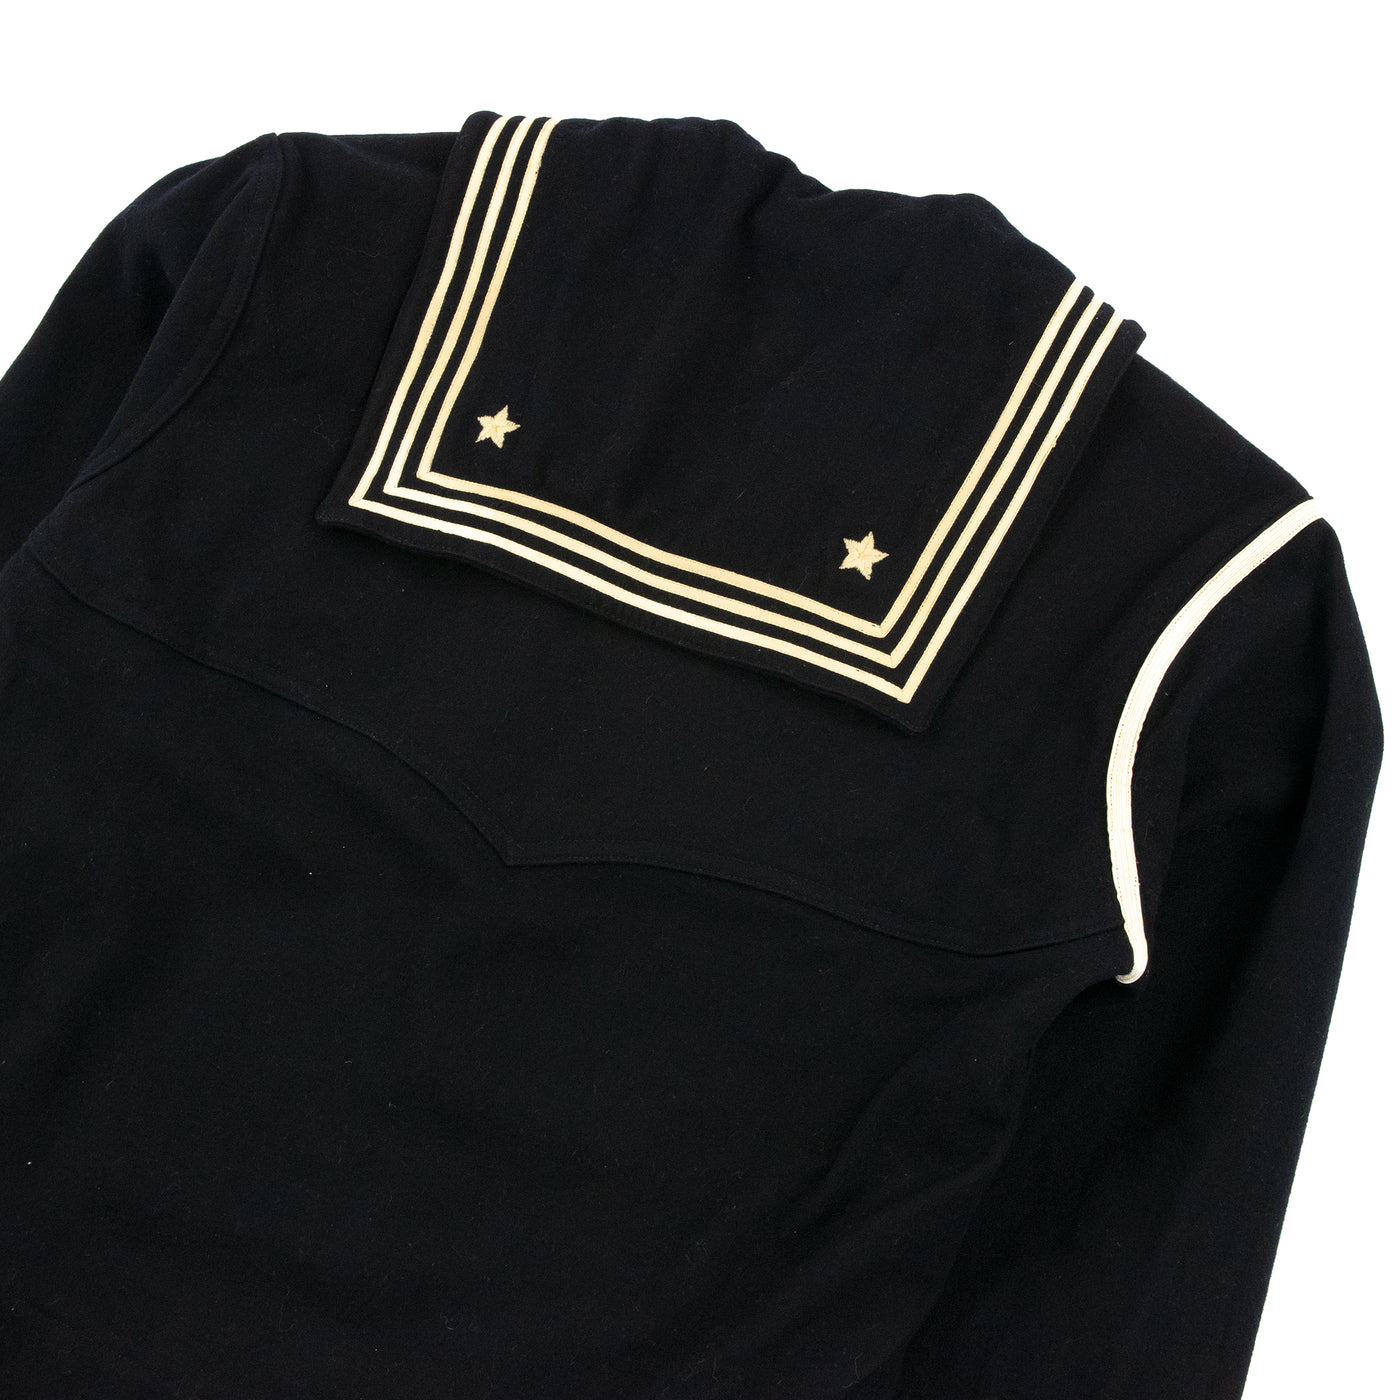 Vintage 1940s WW2 Era US Navy Cracker Jack Military Wool Shirt - XS Back